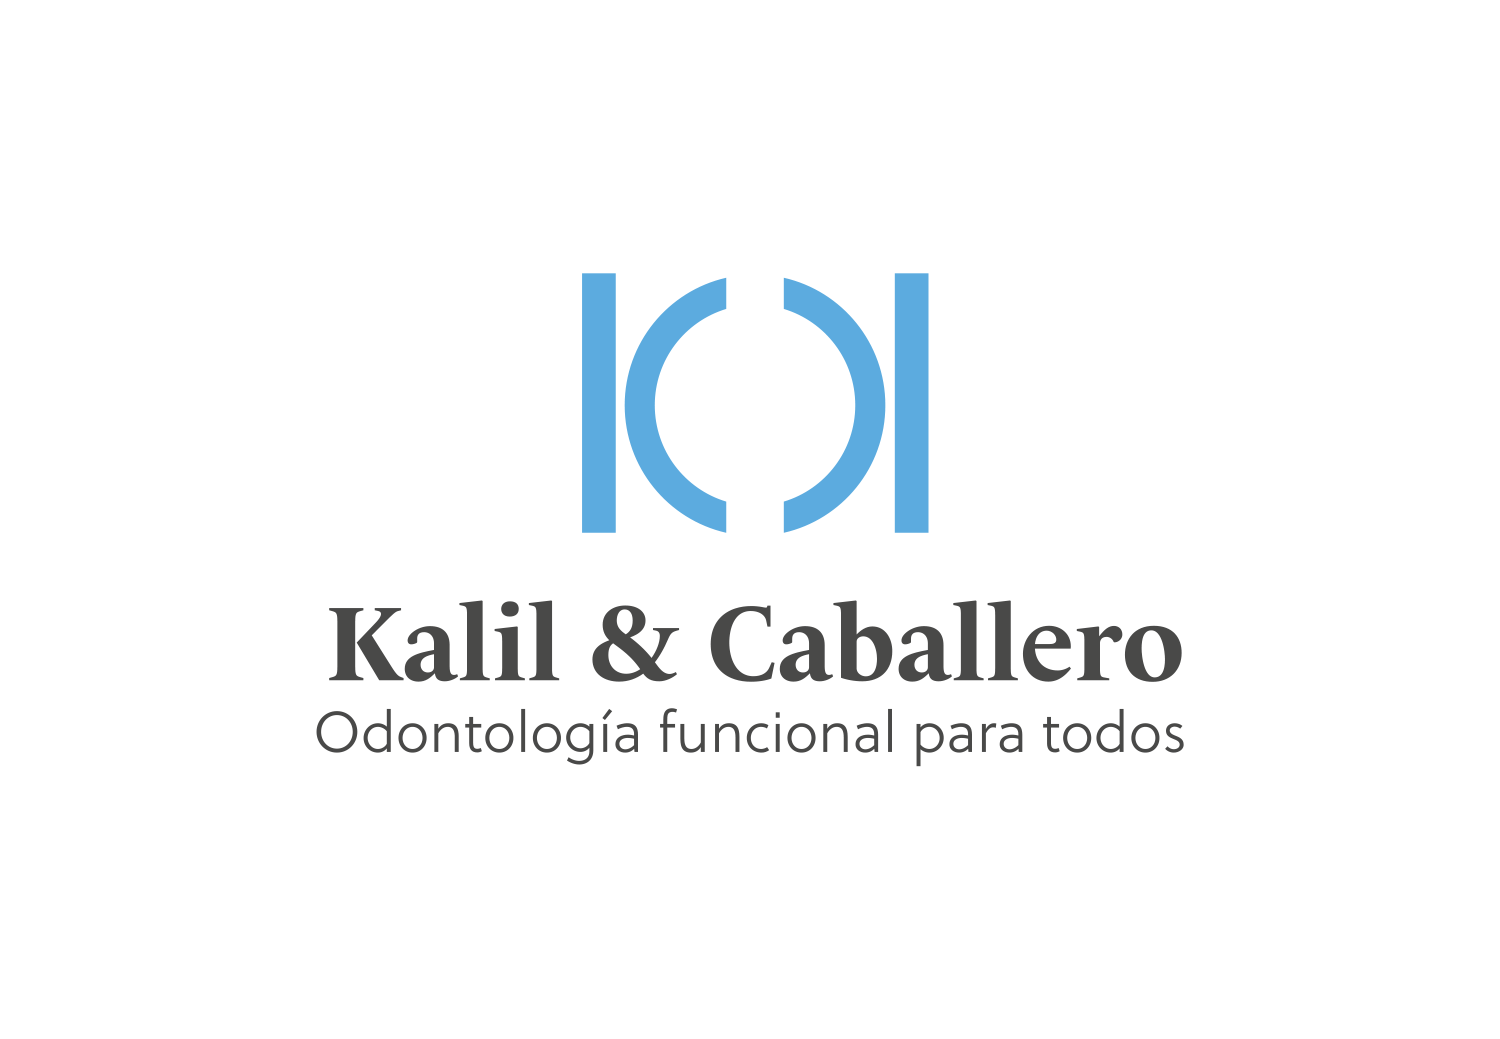 Kalil & Caballero